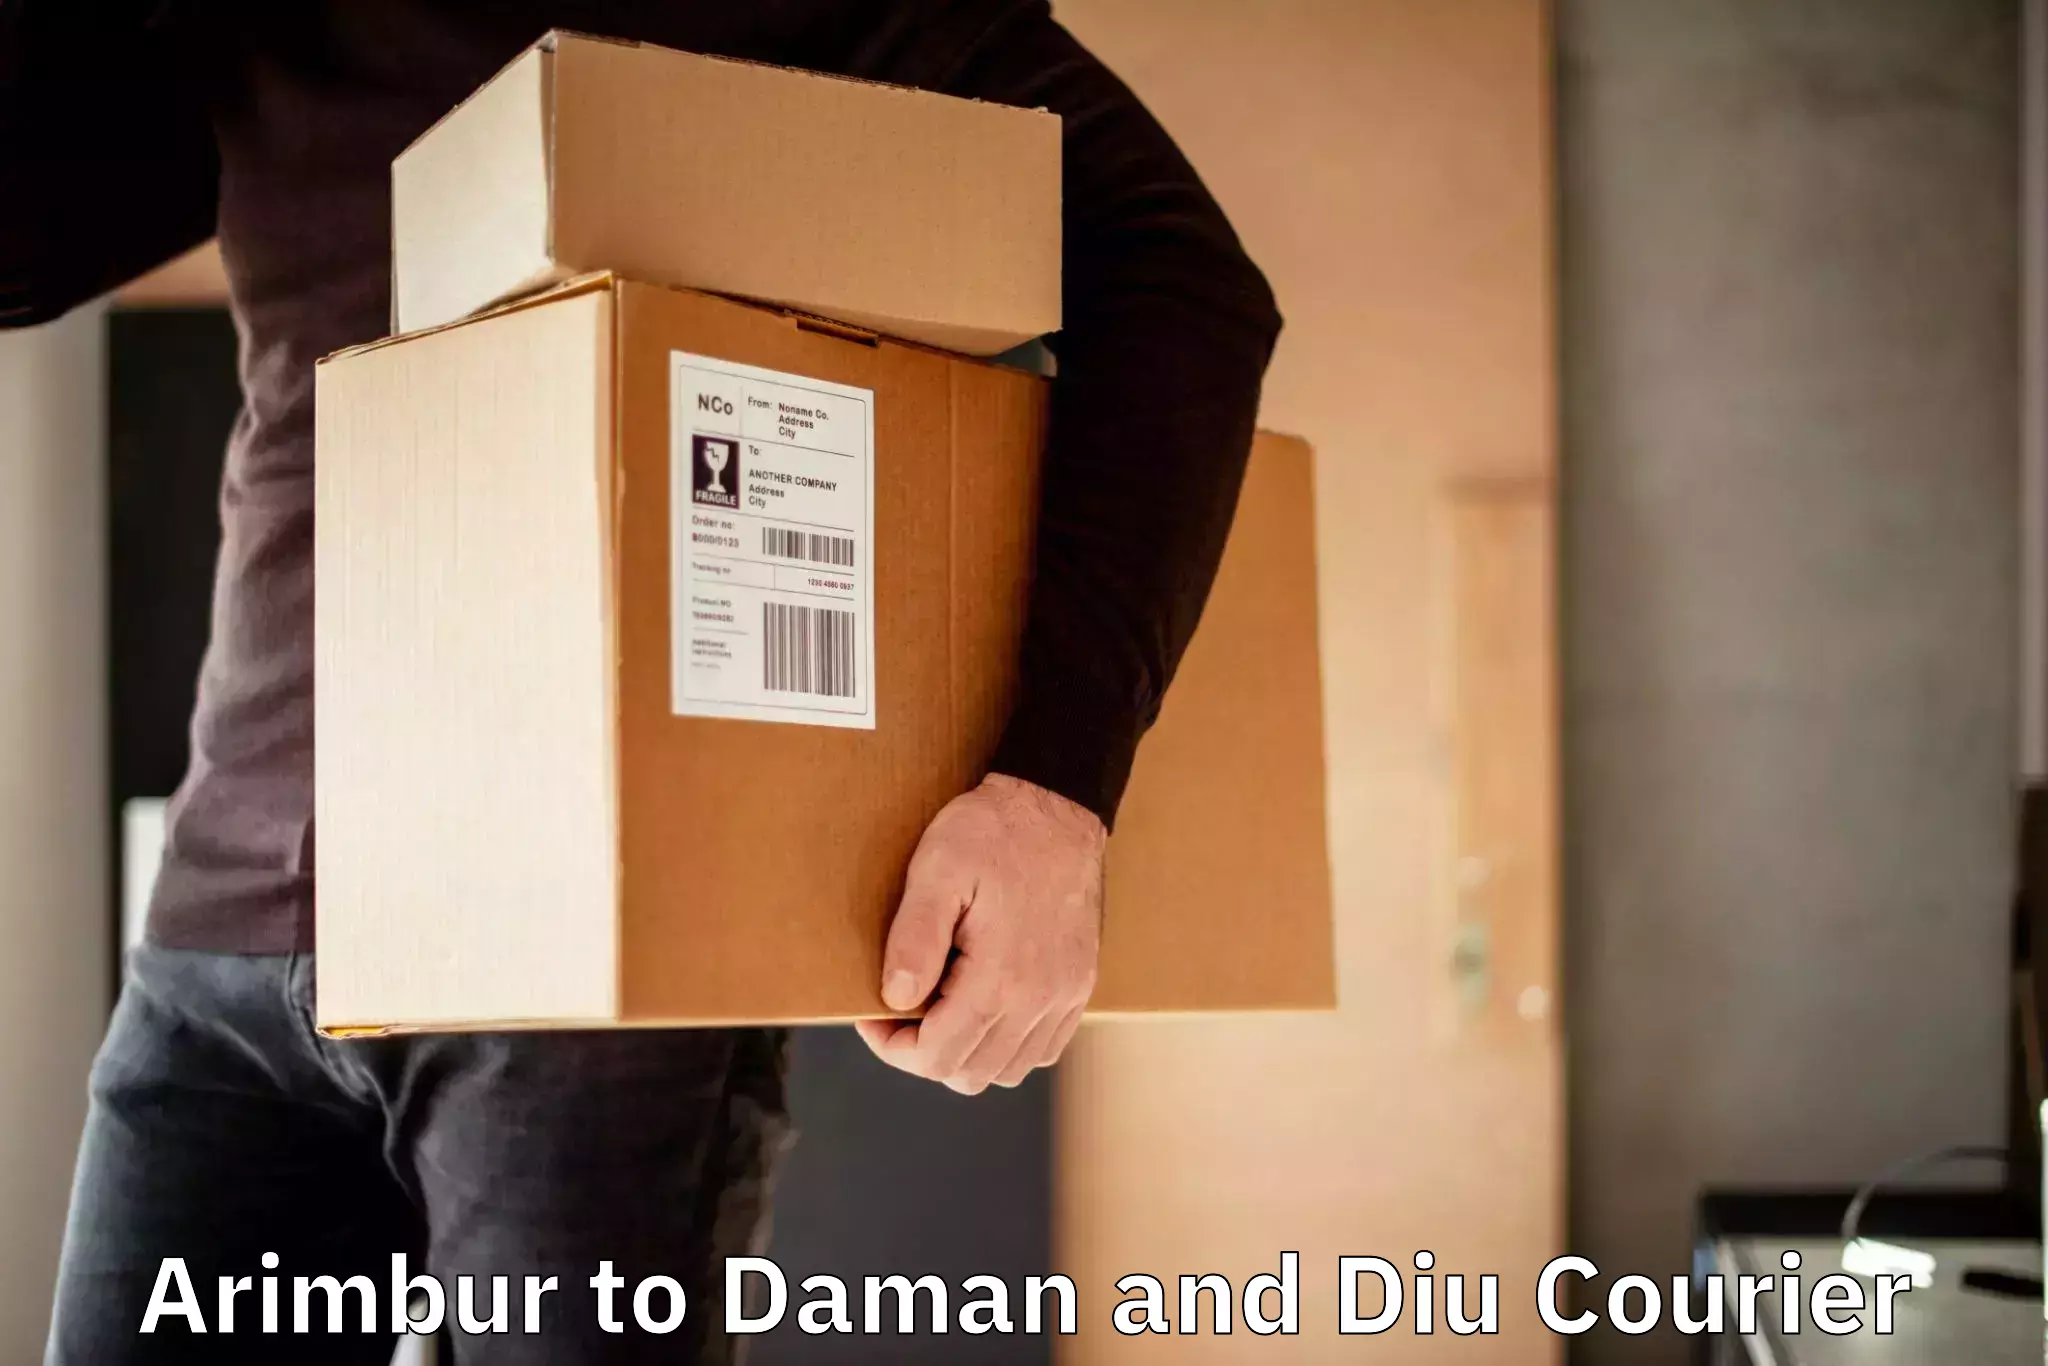 Easy access courier services in Arimbur to Diu